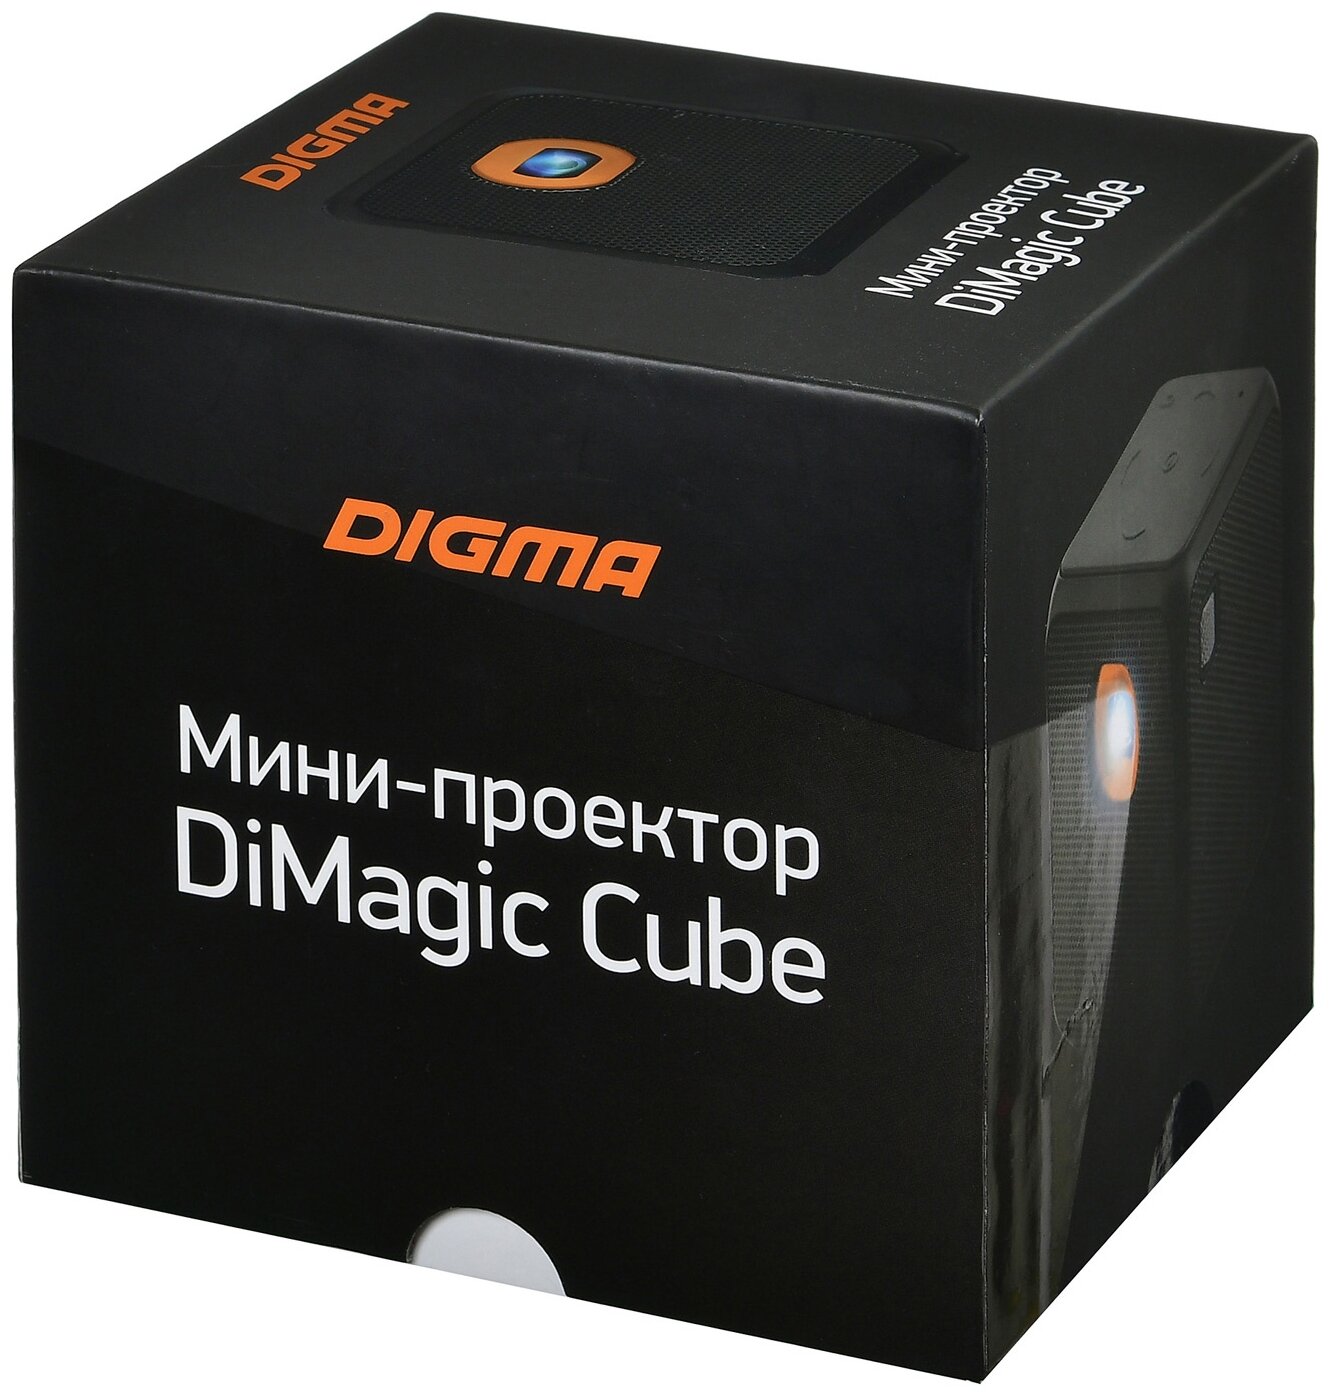 Проектор DIGMA DiMagic Cube (DM001) 854x480 10000:1 50 лм DLP 034 кг